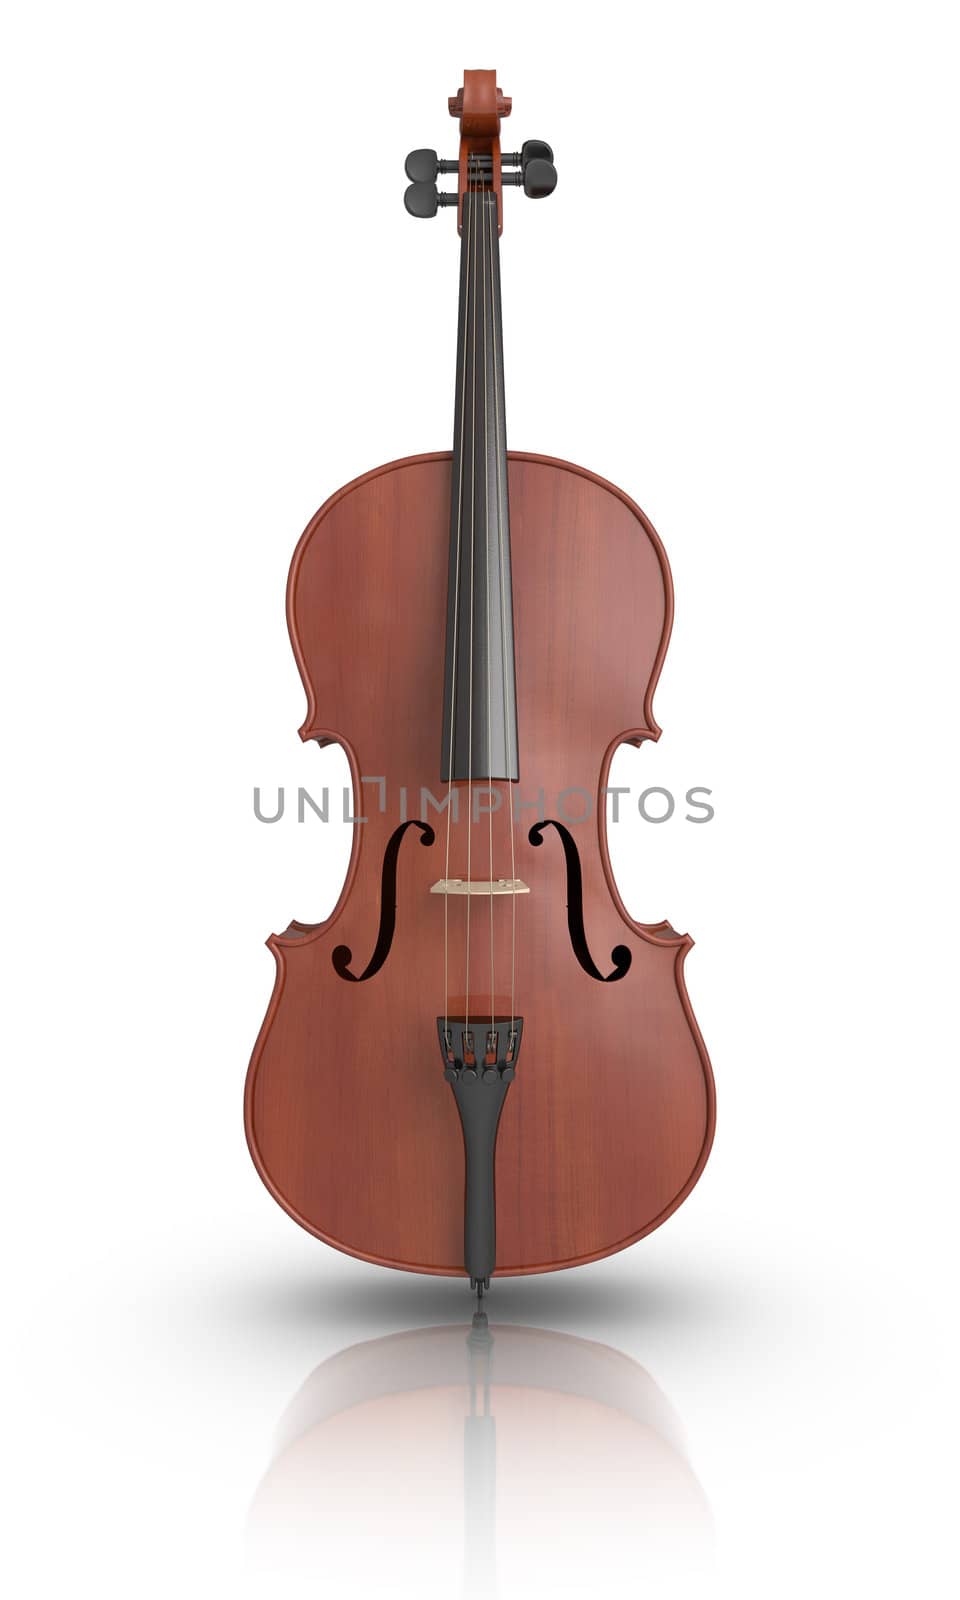 Cello by ayzek